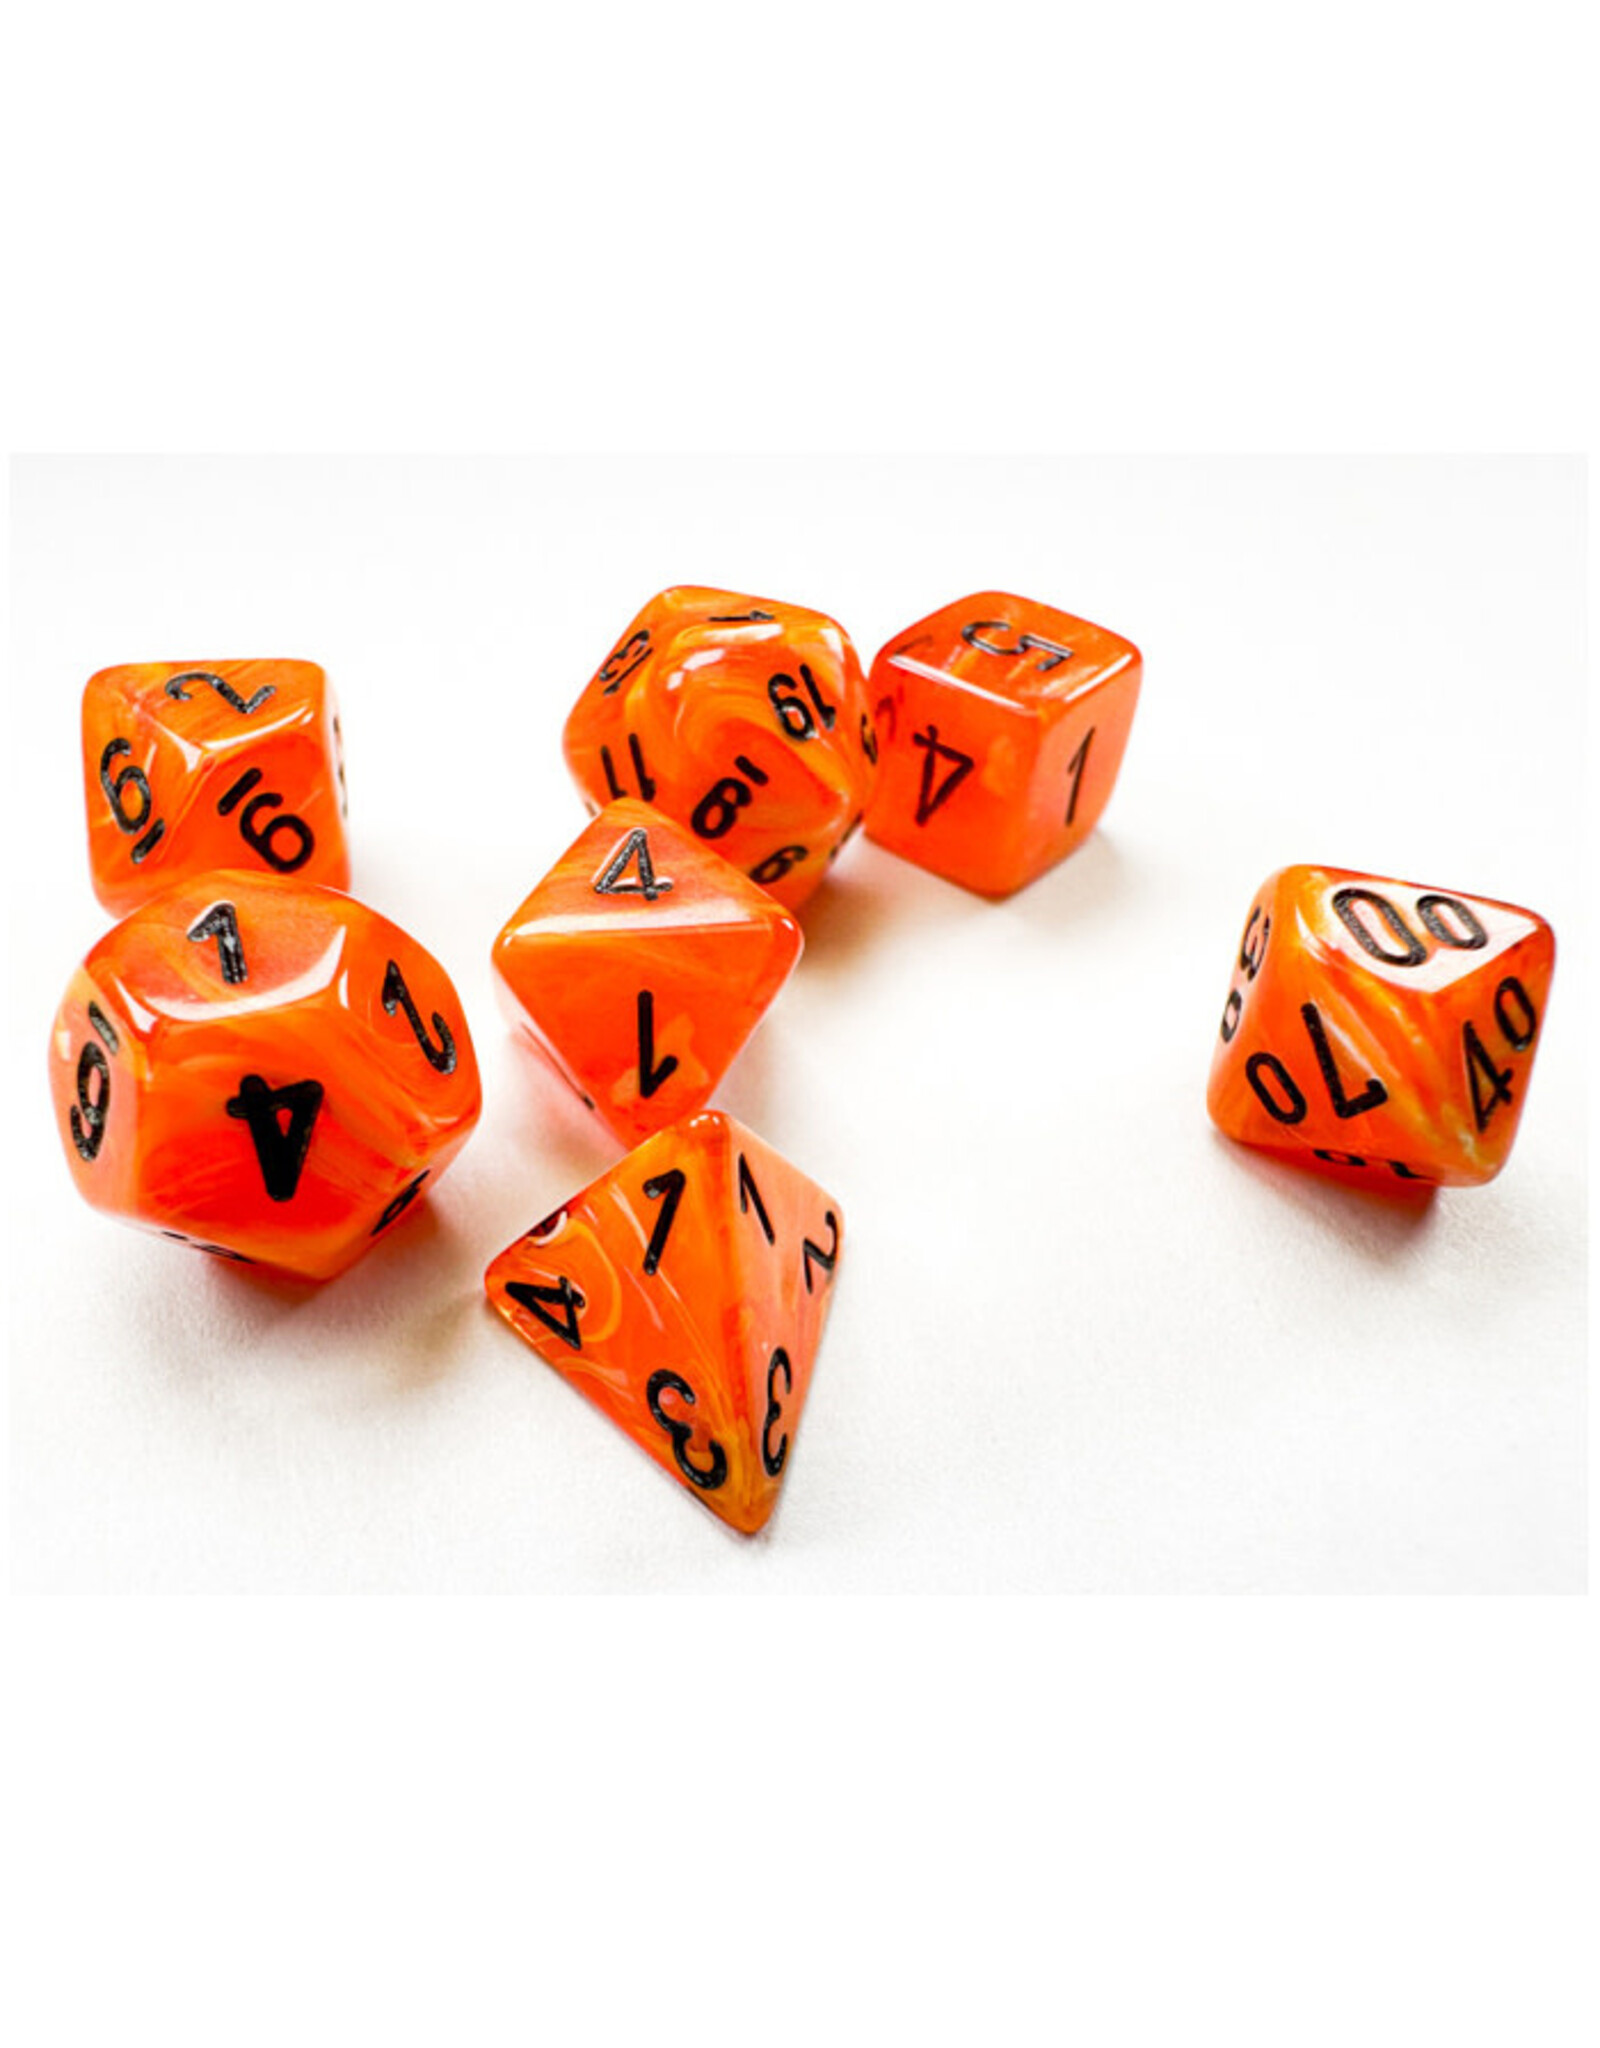 Chessex Mini Vortex Orange with Black poly 7 dice set